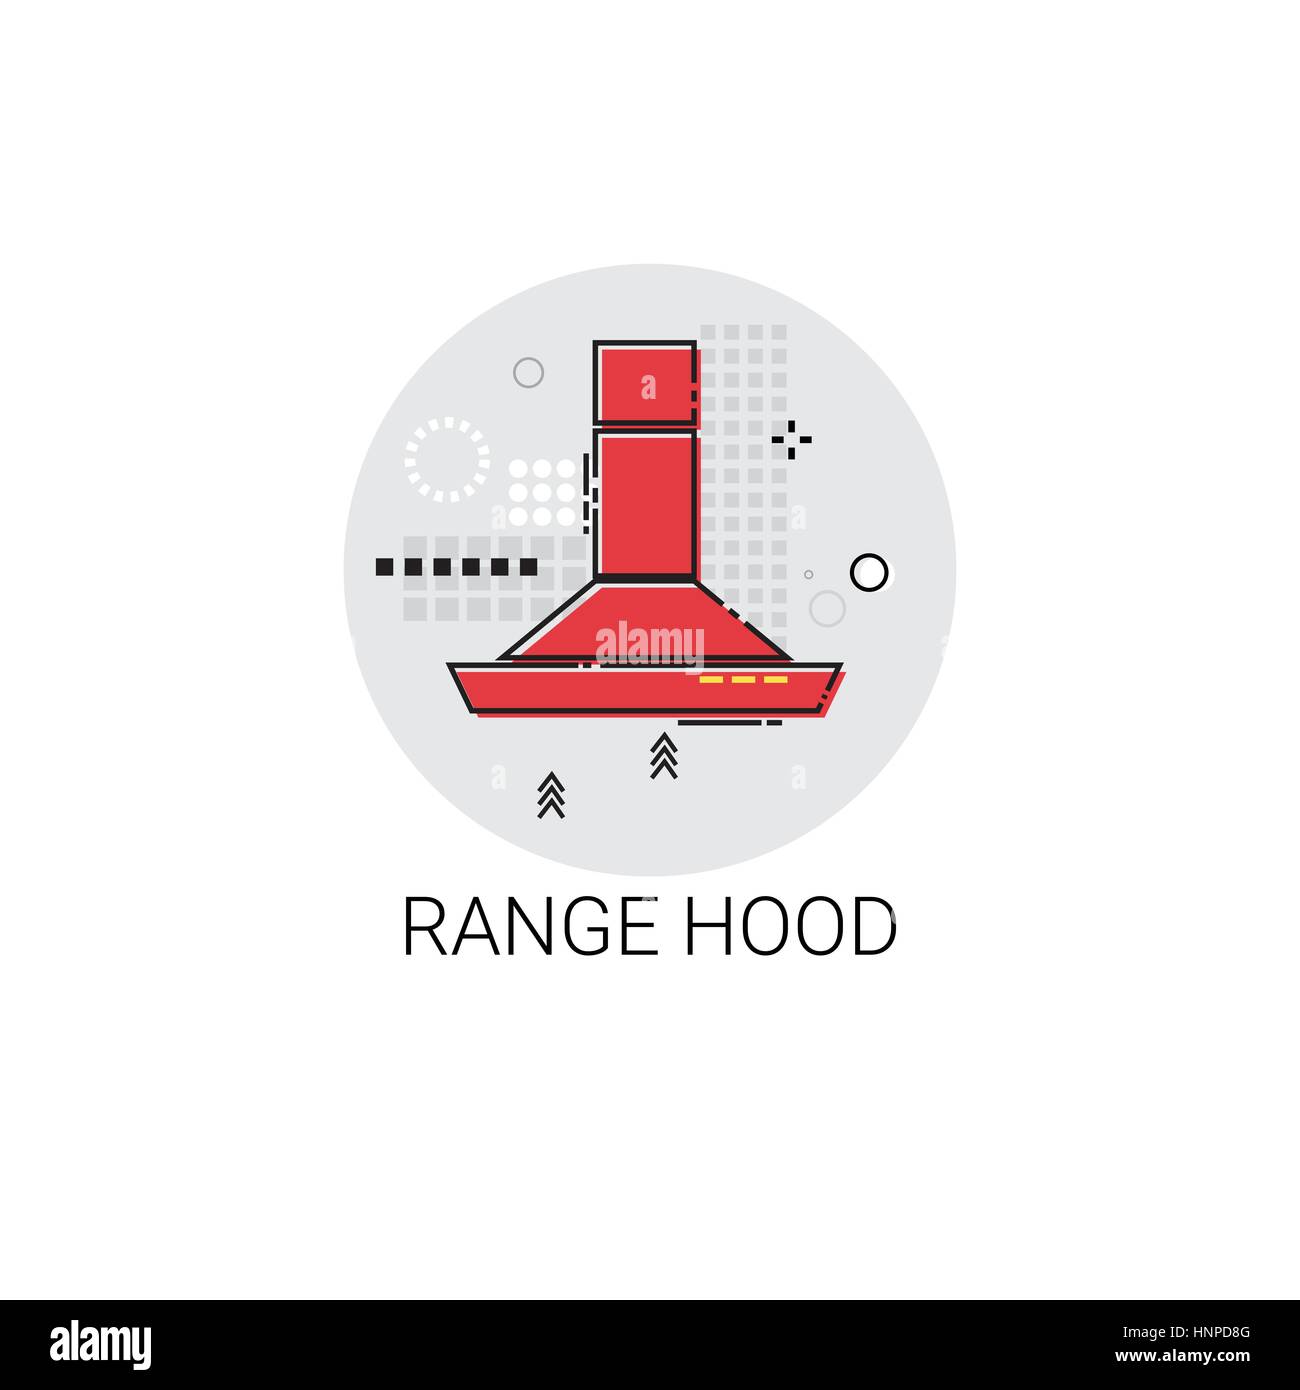 Range Hood Cooking Utensils Kitchen Equipment Appliances Icon Stock Vector